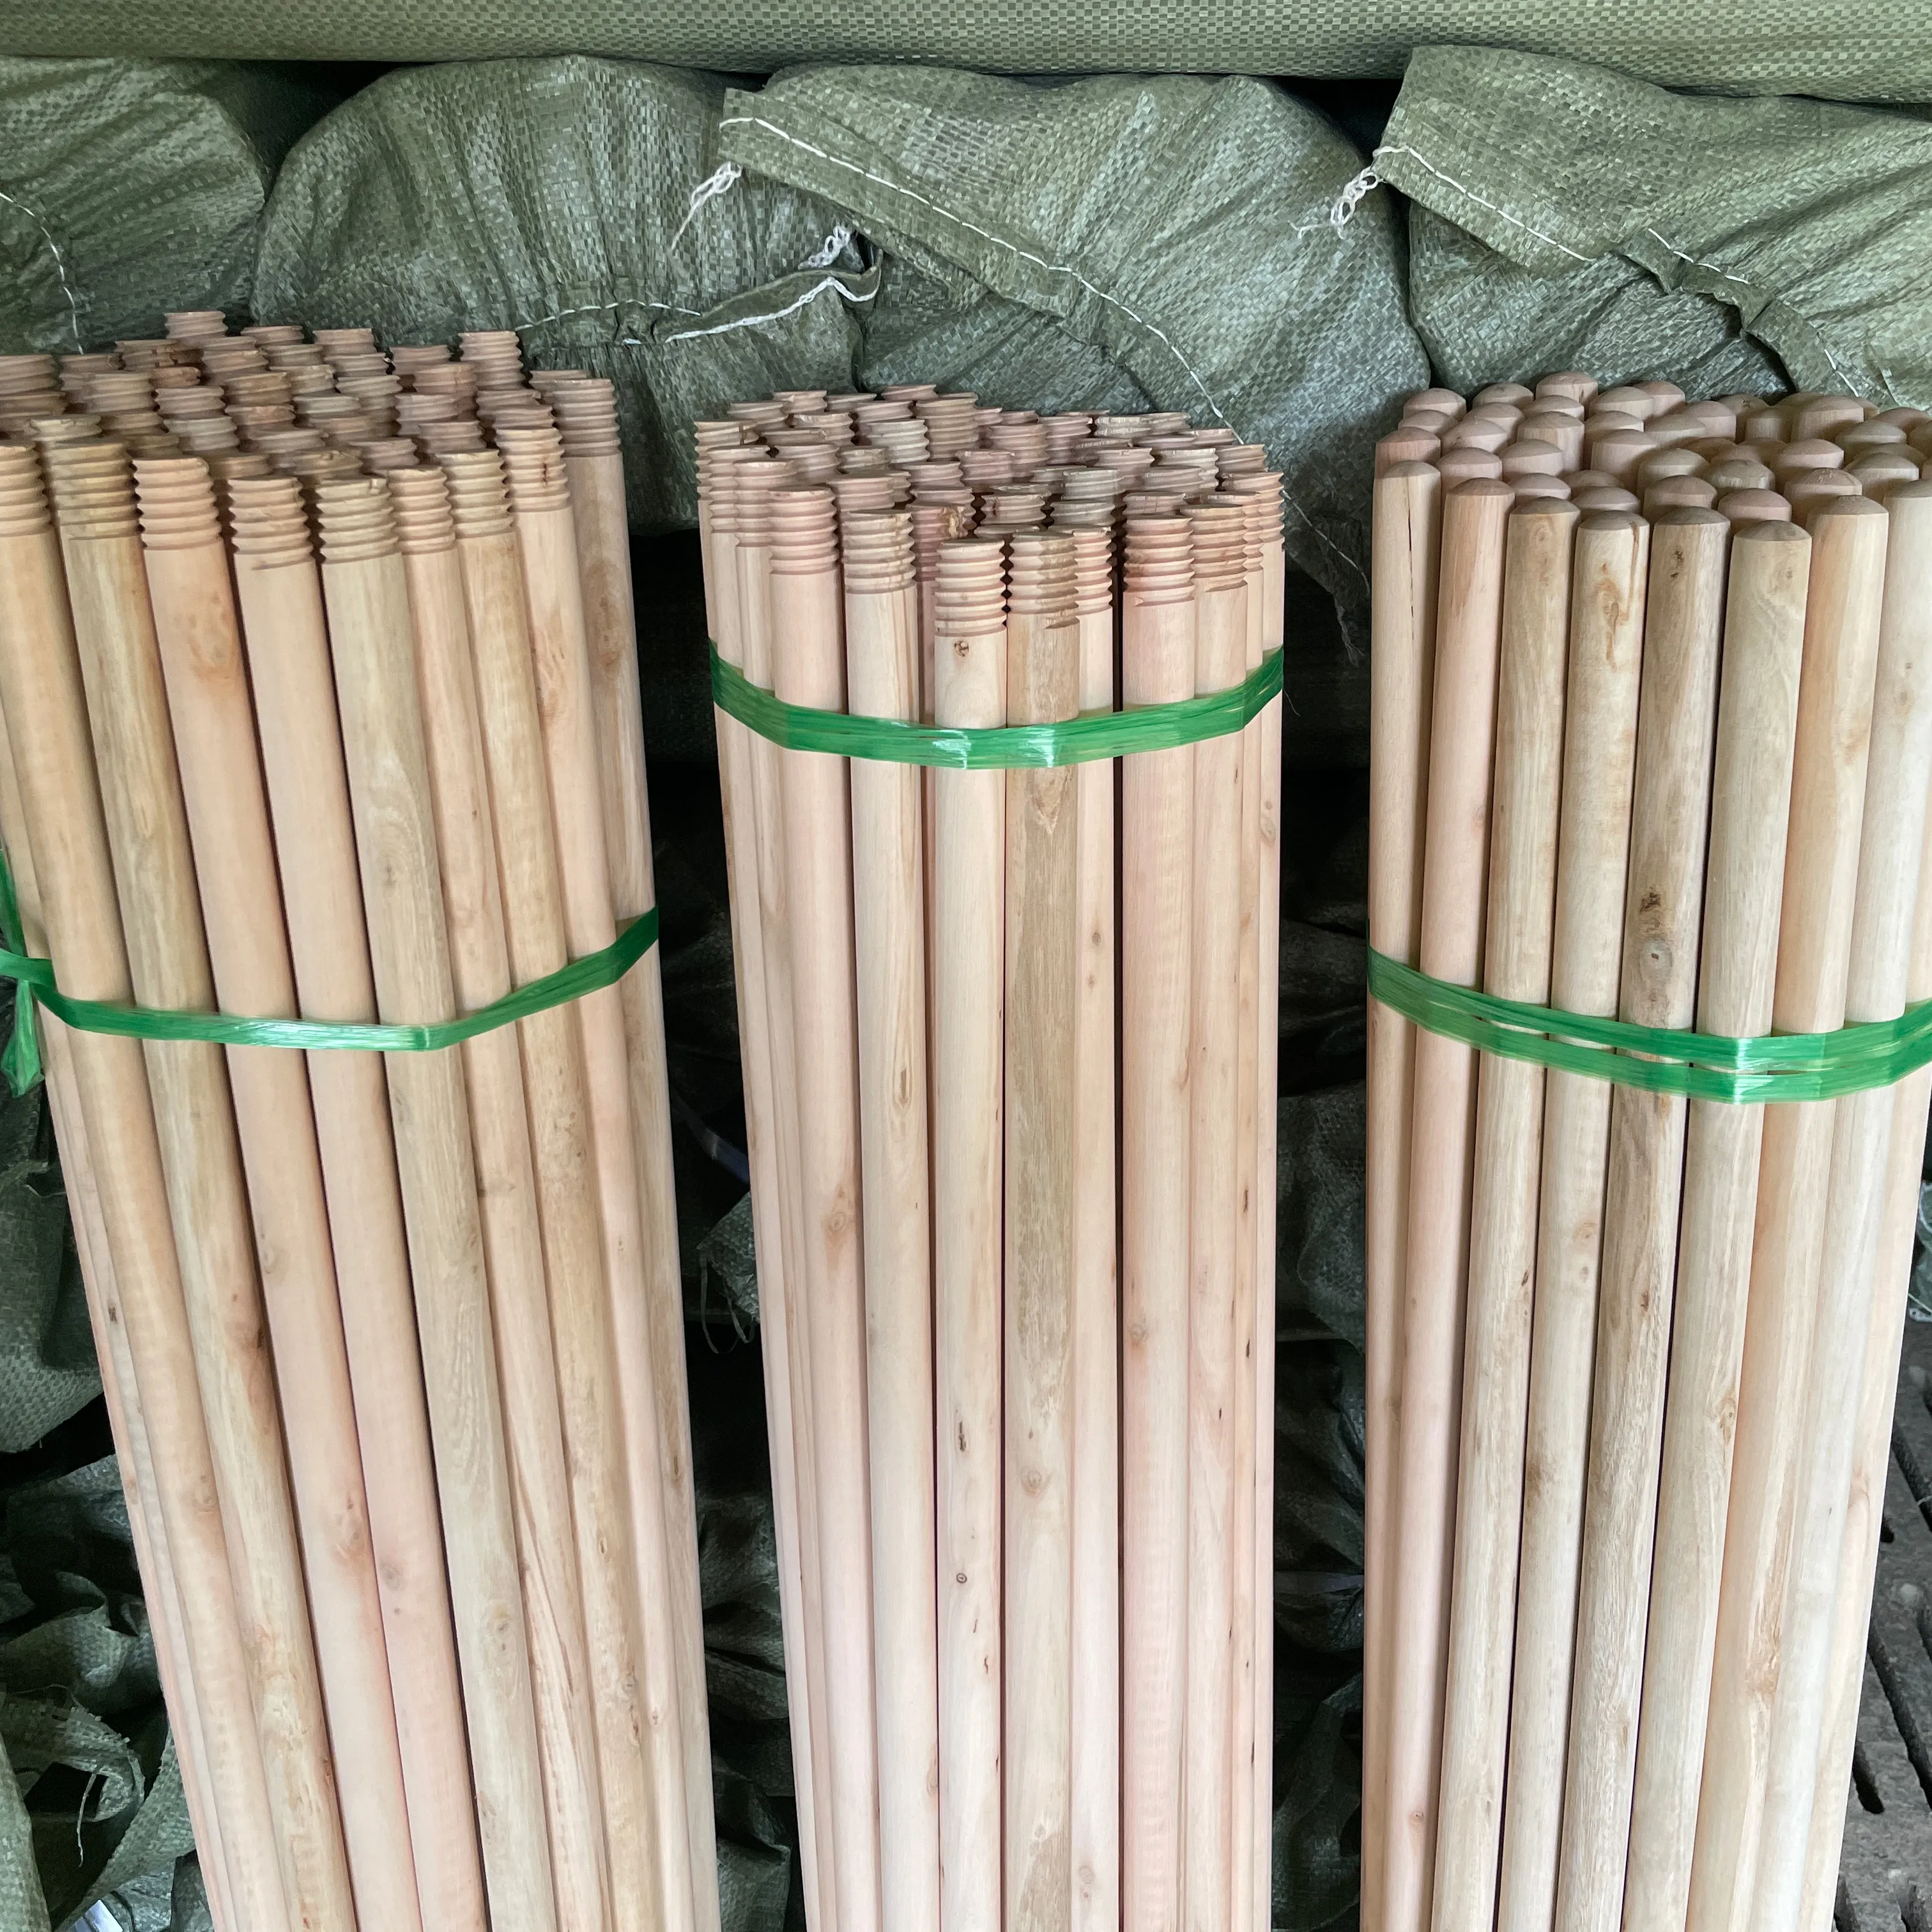 Productos de limpieza biodegradables, palo de escoba de madera natural